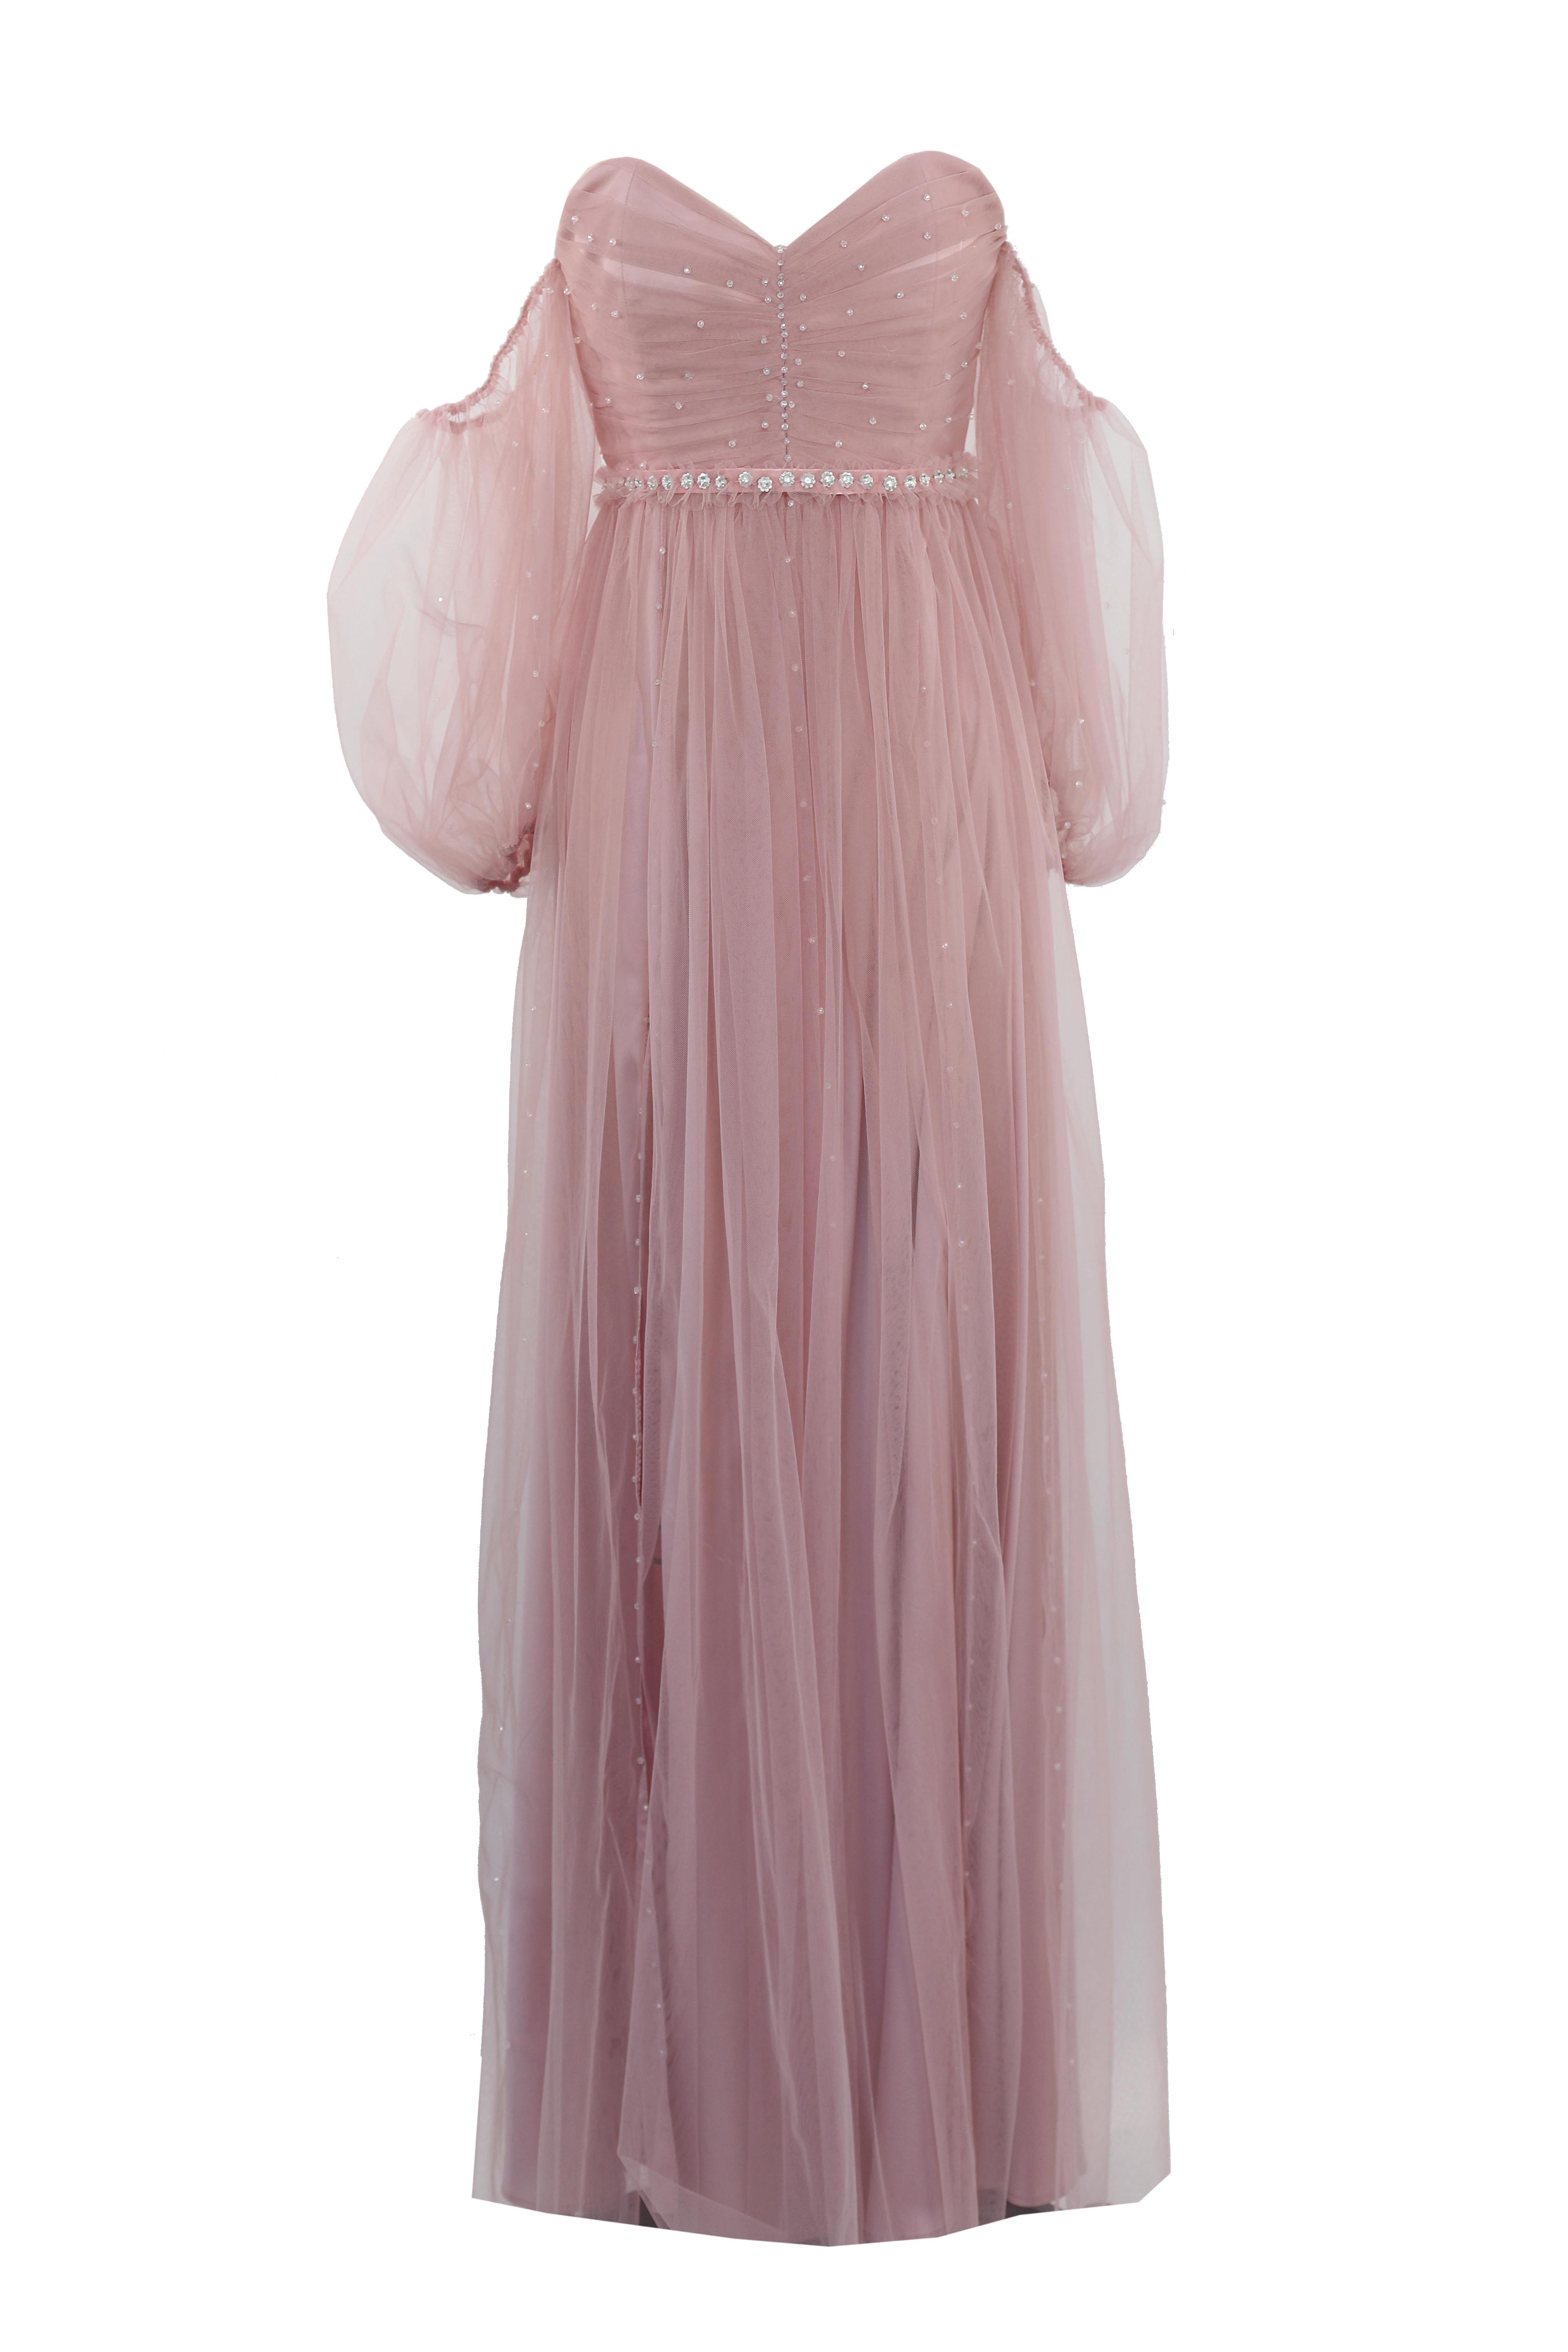 R20163 01 - LETIZIA pink dress AMBAR STUDIO